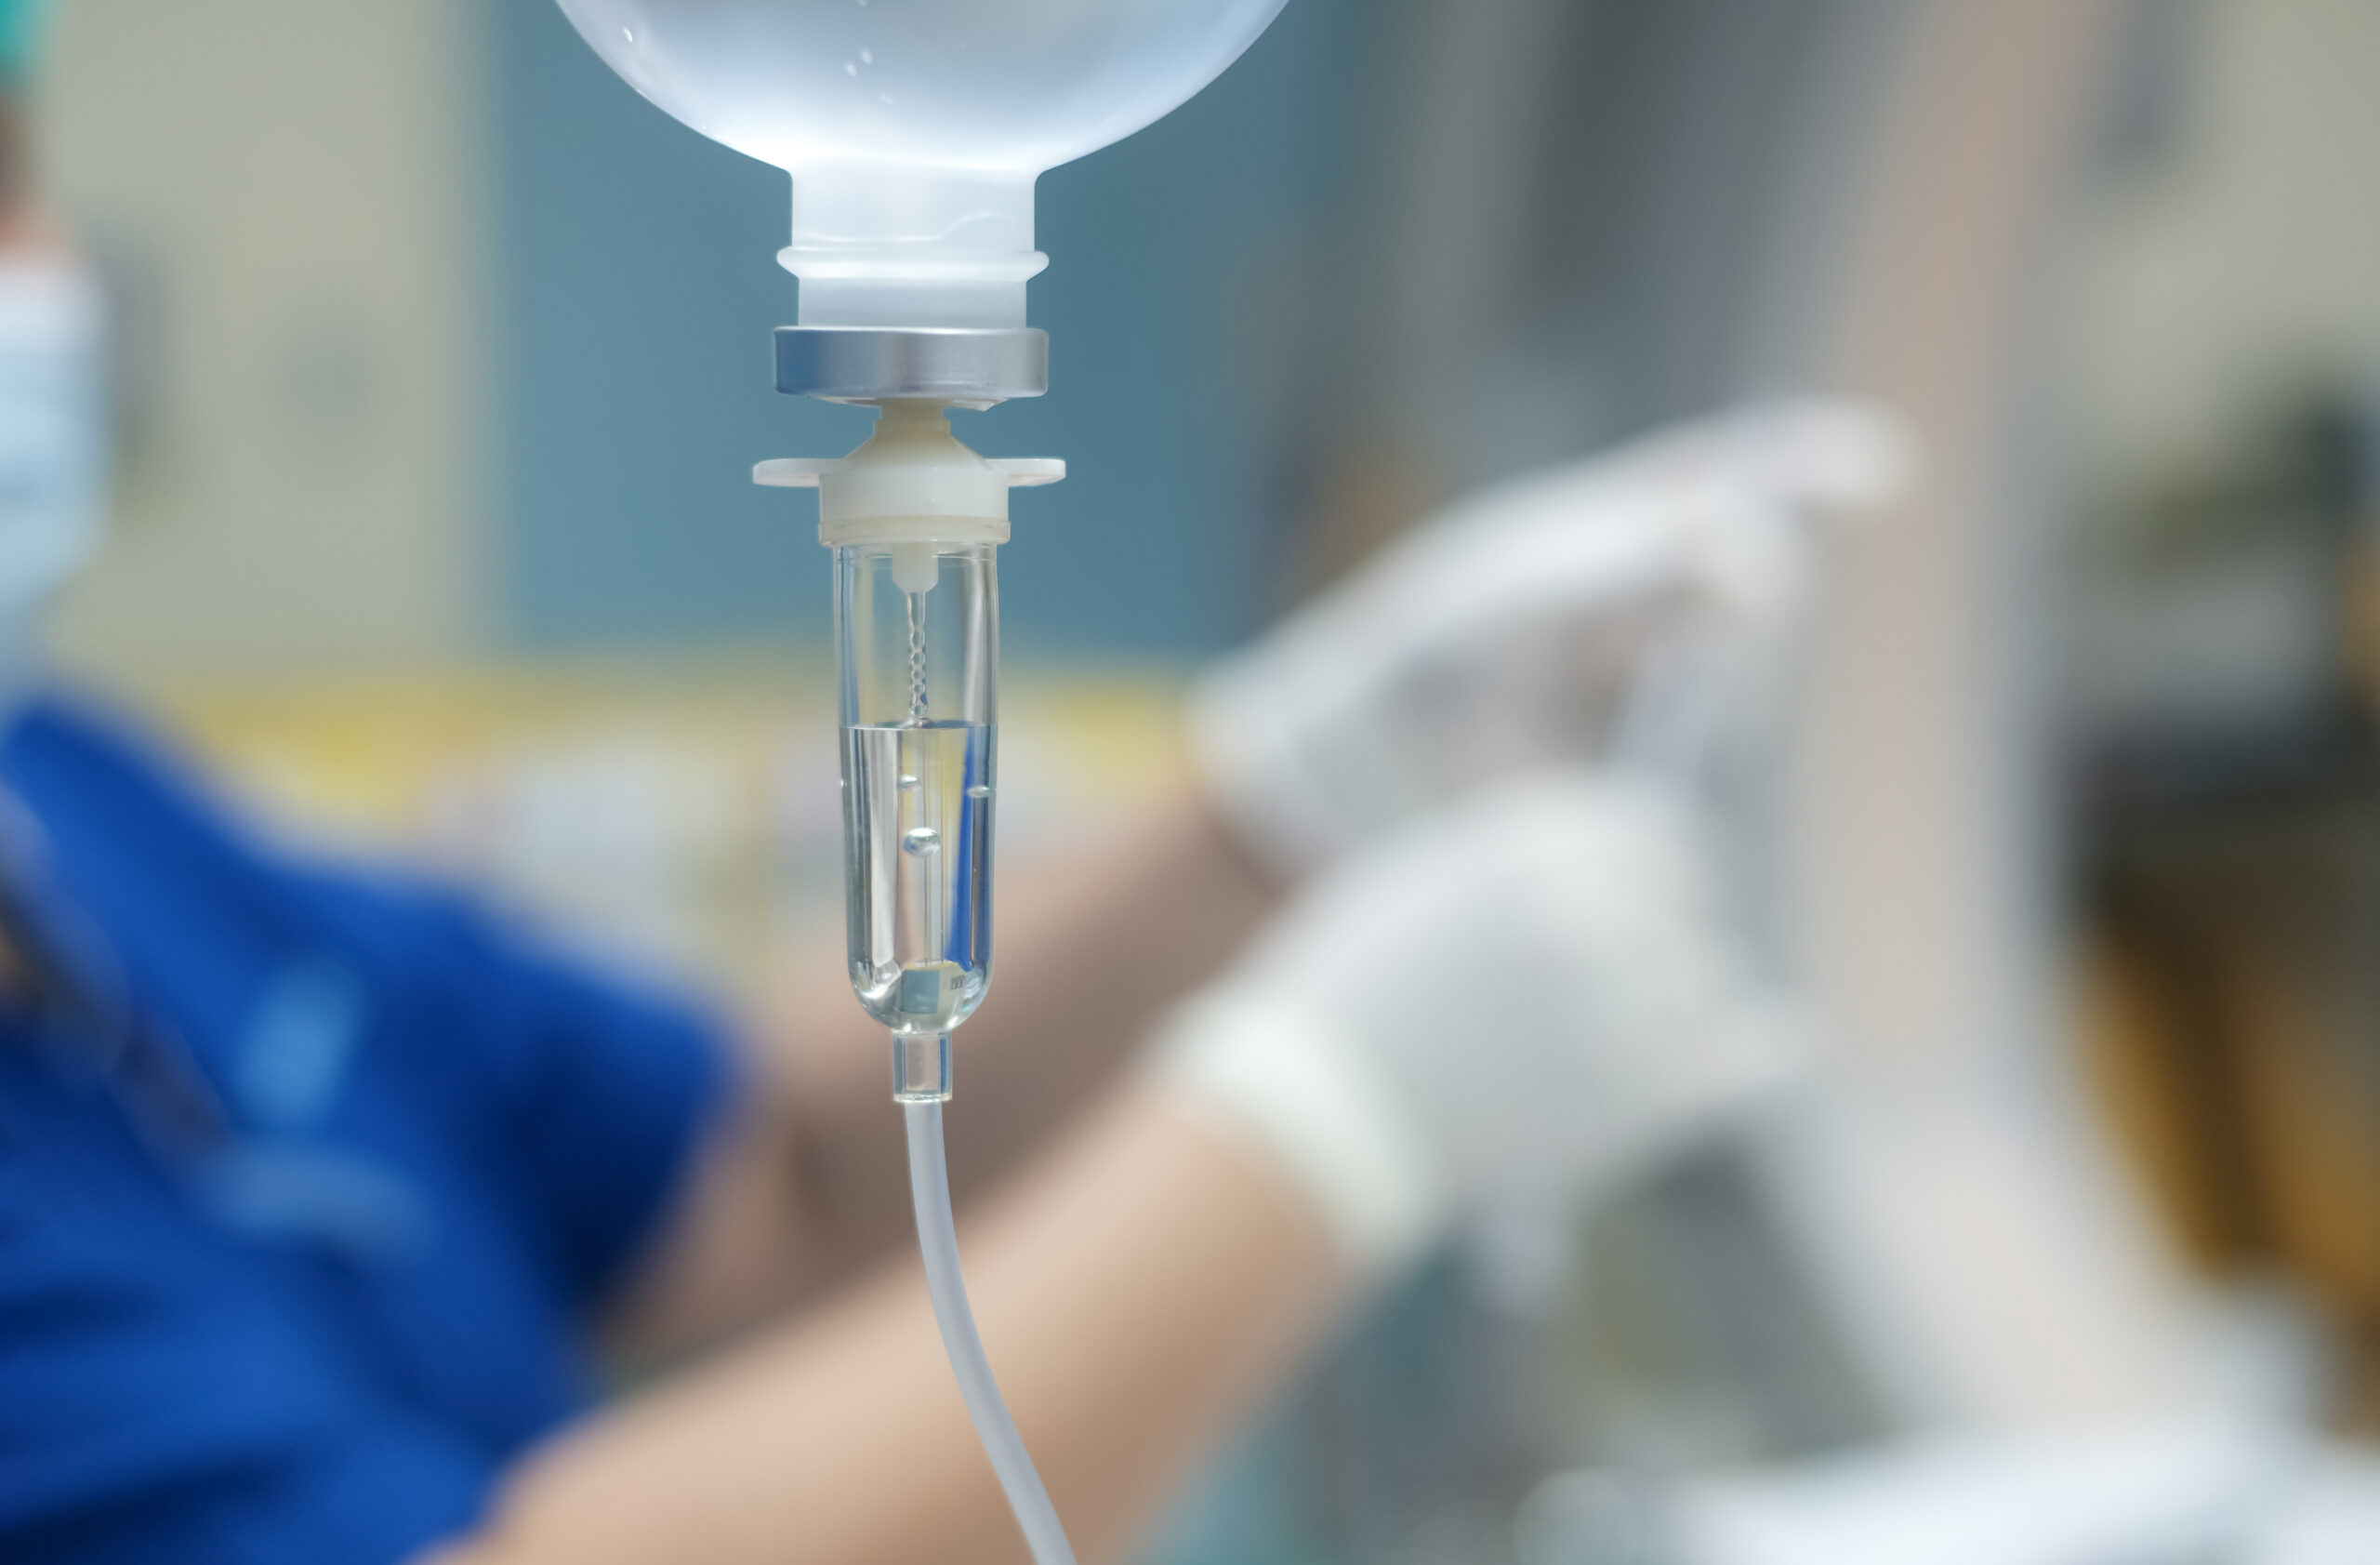 Set vitamin iv fluid intravenous drop saline drip hospital room